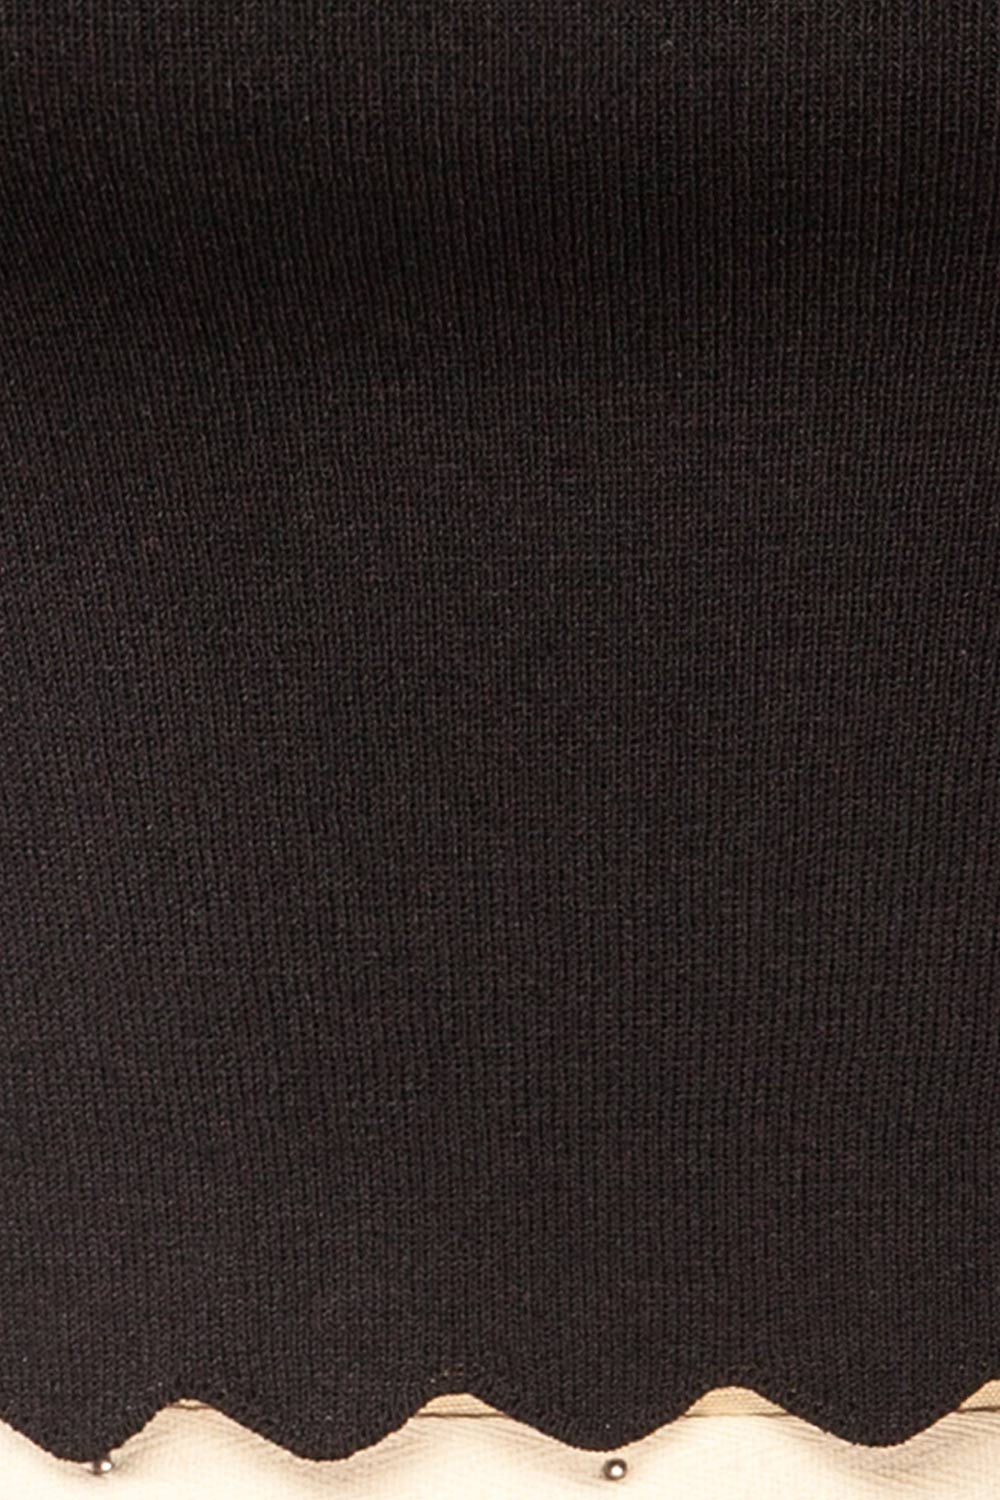 Shandaken Cropped Black Top w/ Scalloped Hem | La petite garçonne fabric 